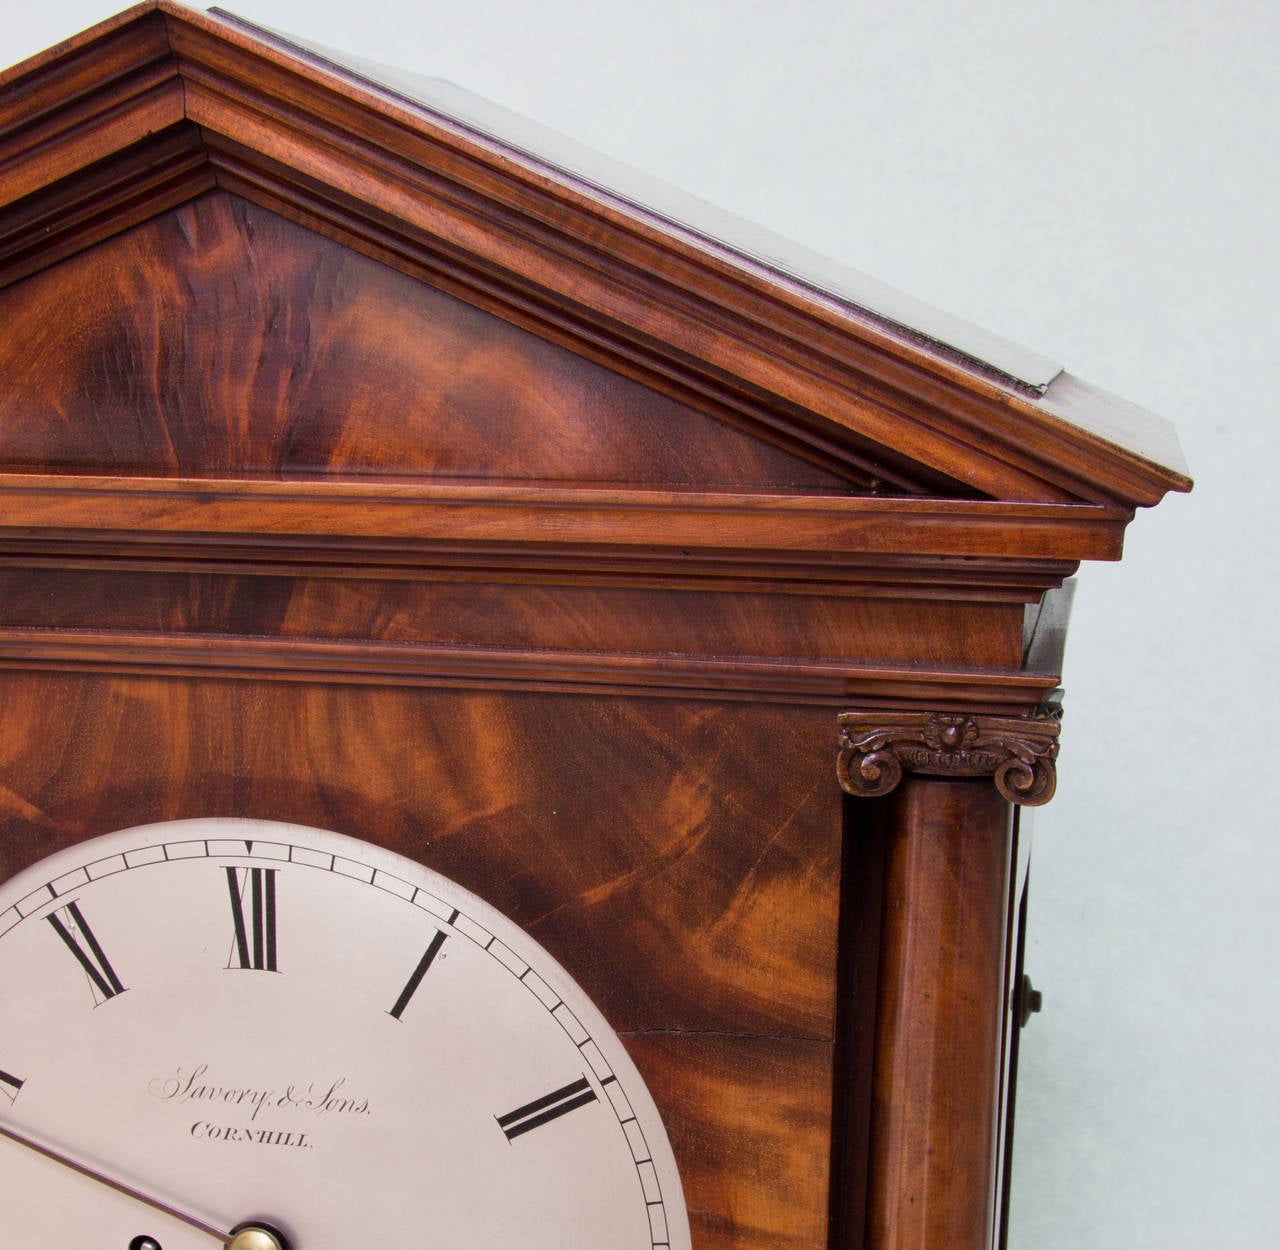 19th Century Mahogany Bracket Clock Signed Savory & Sons, Cornhill For Sale